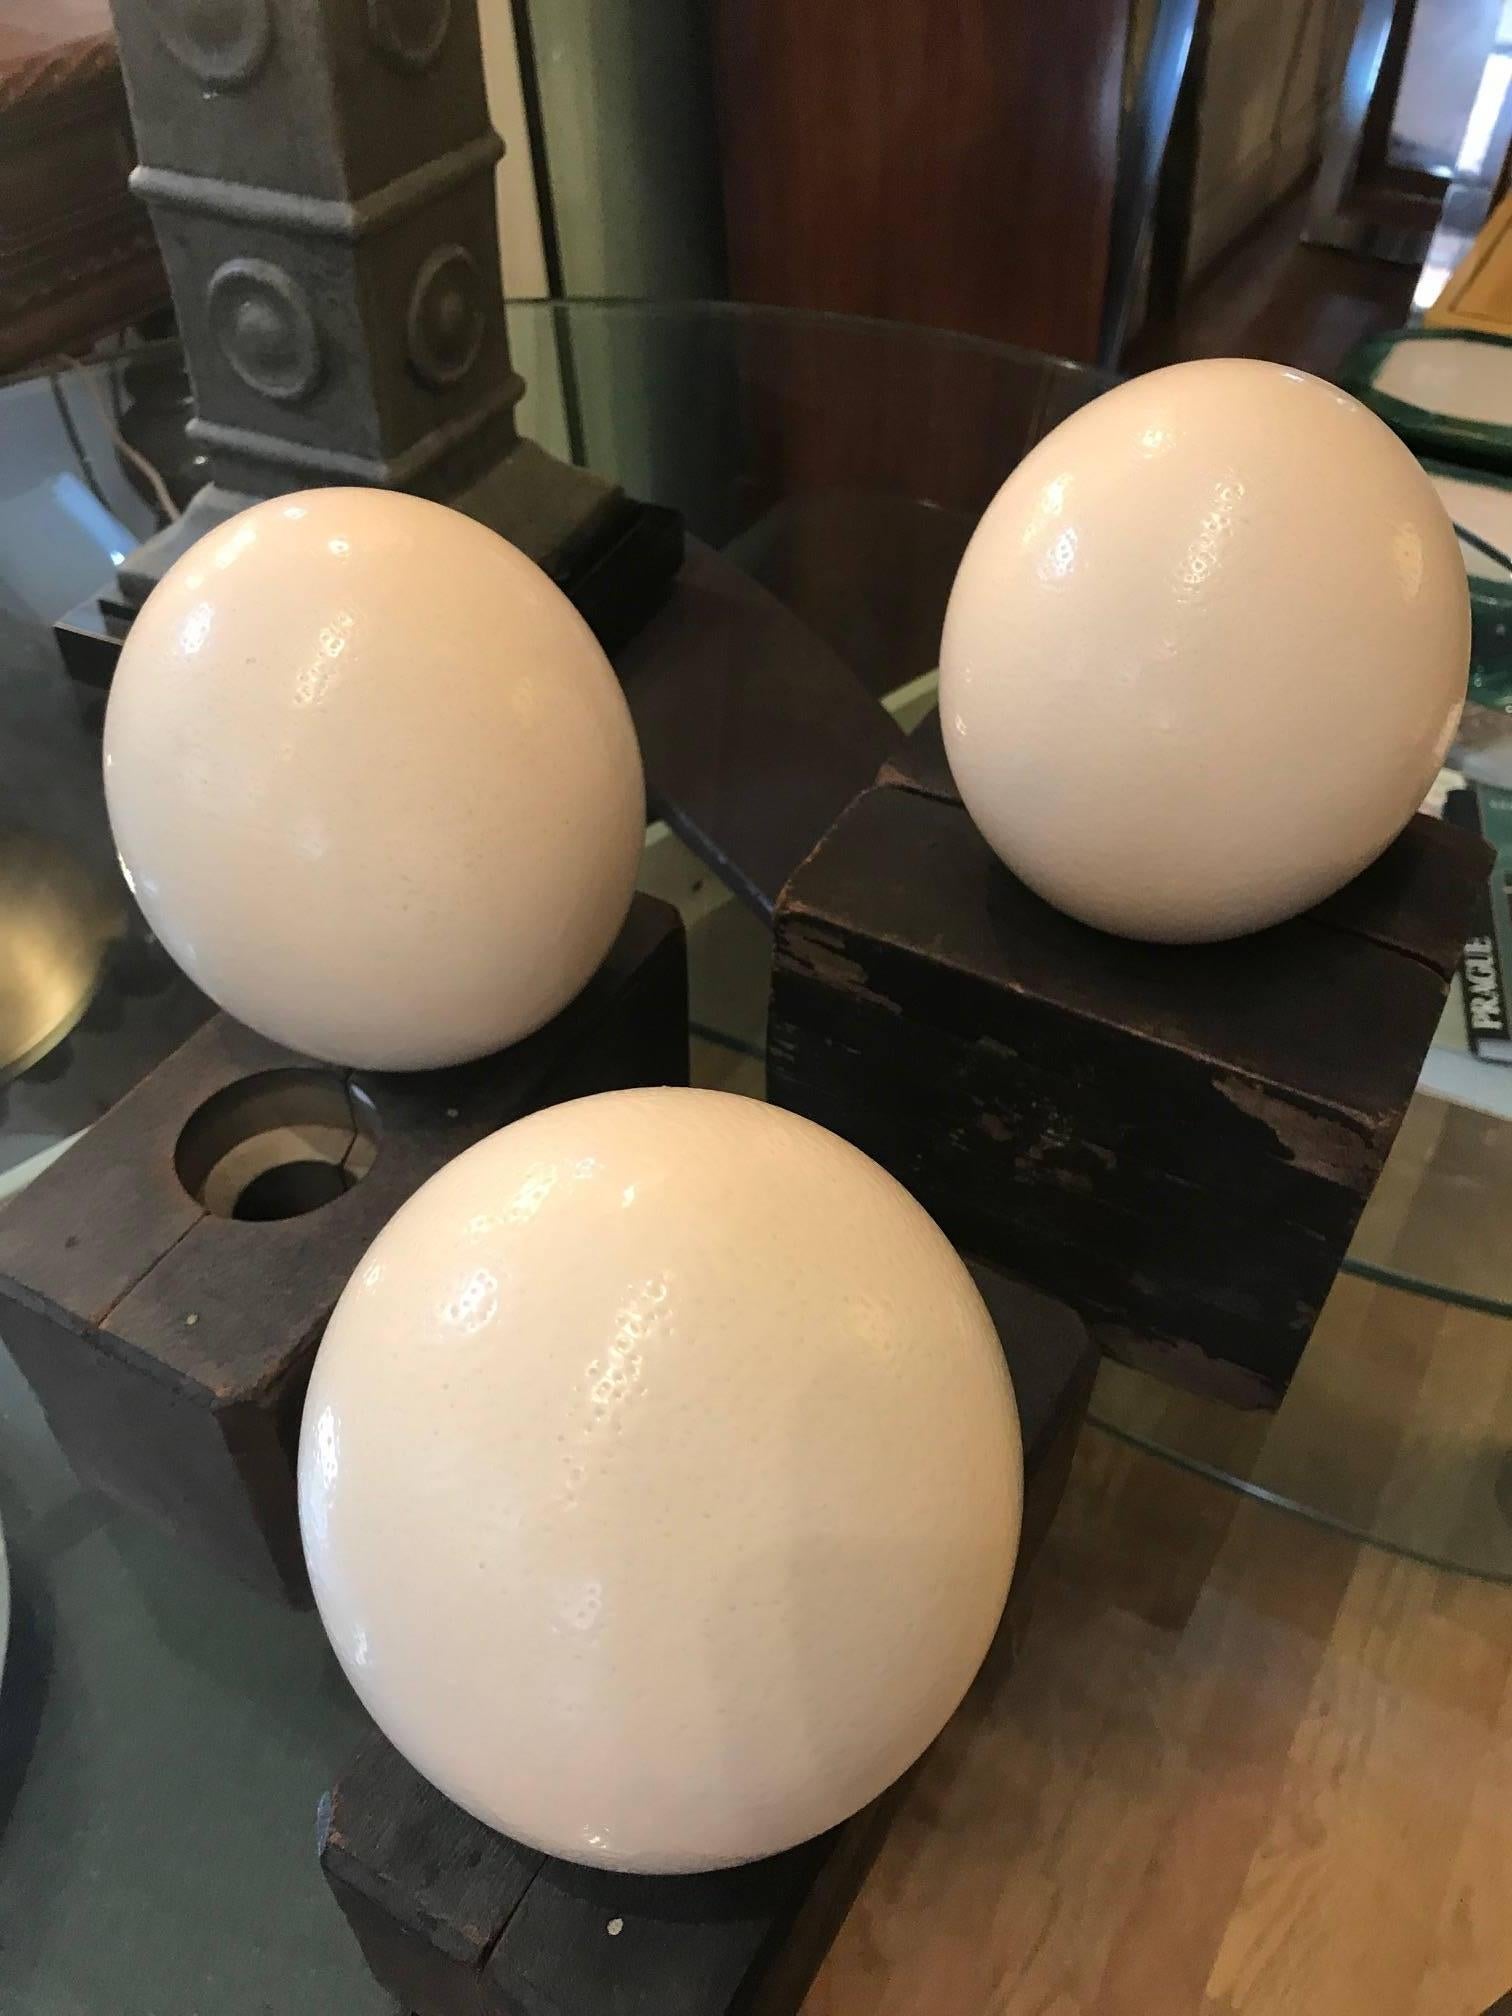 Primitive Three Ostrich Eggs on Decorative Wood Blocks